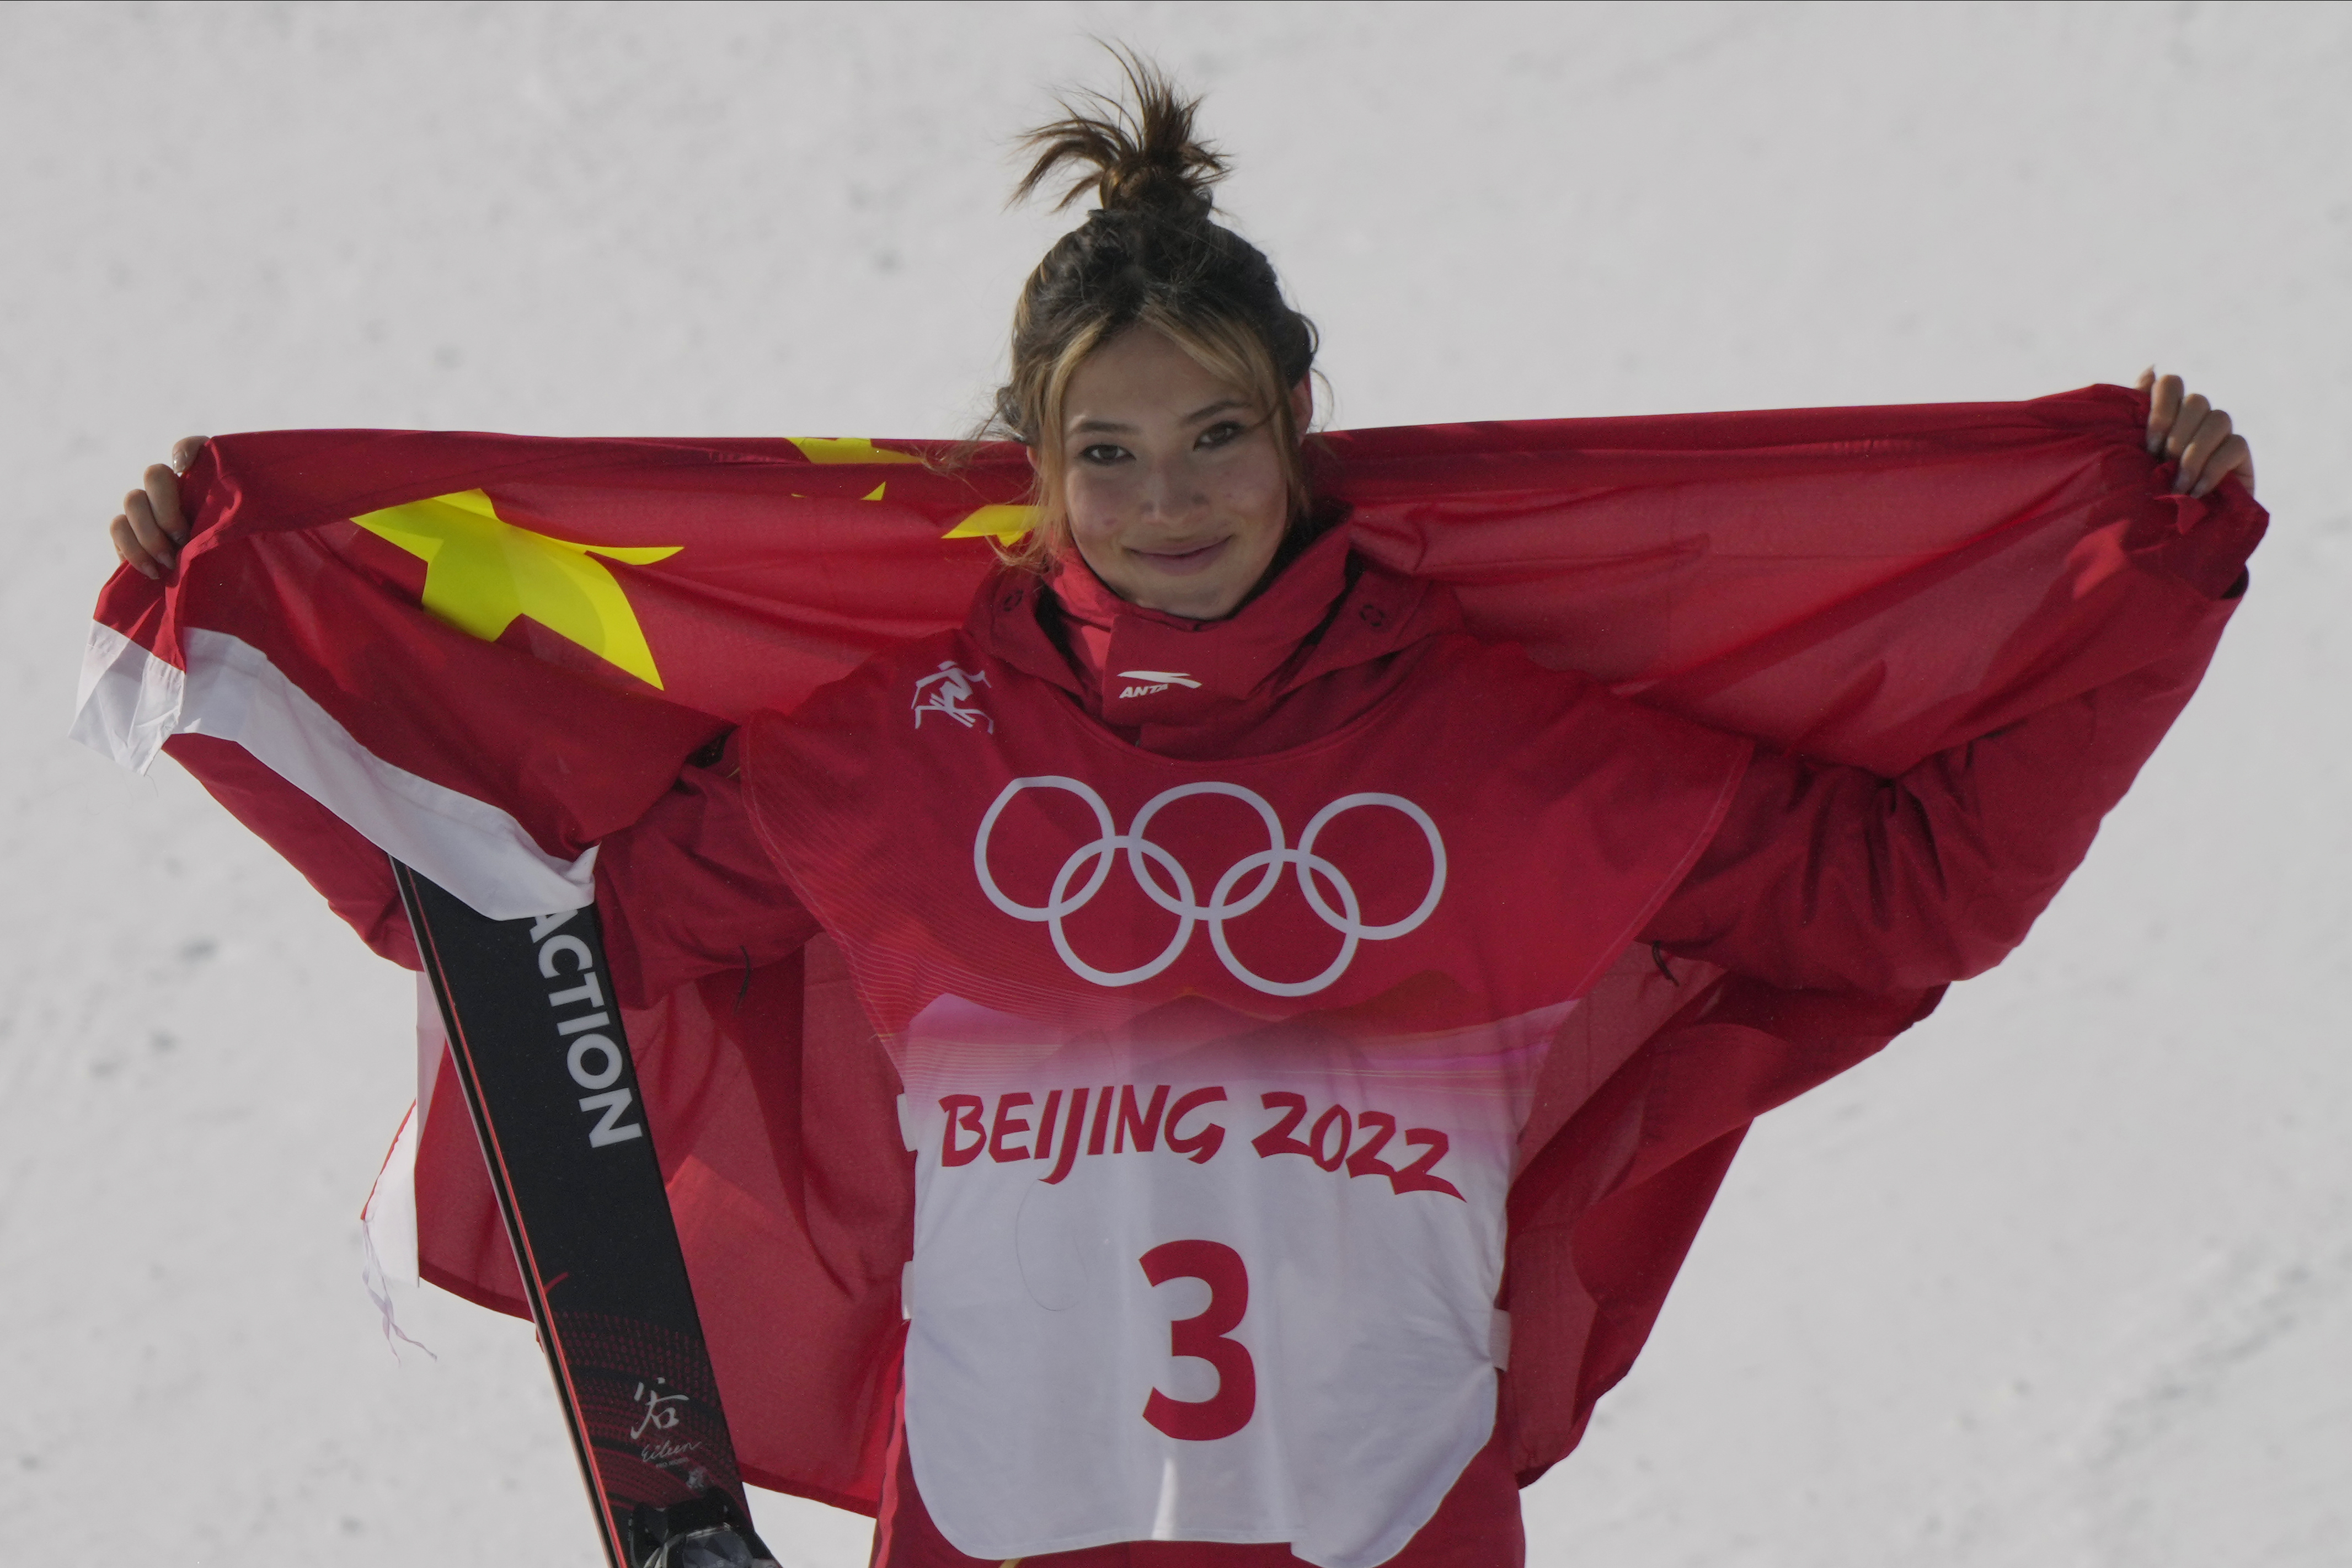 How citizenship row clouded Eileen Gu's Olympics, China